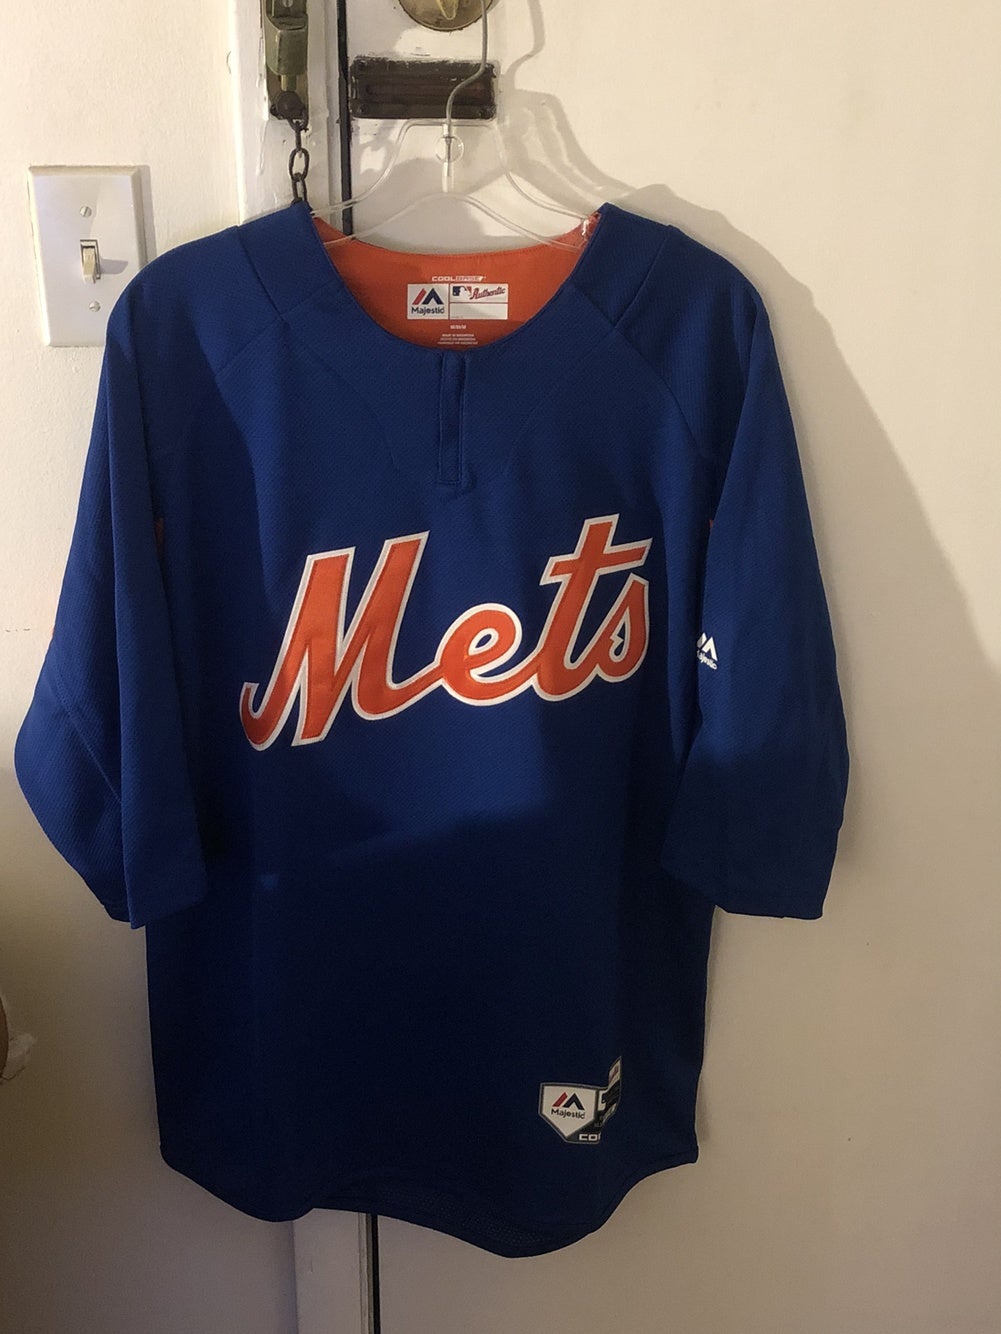 New York Mets Jacob deGrom jersey lapel pin & magnet